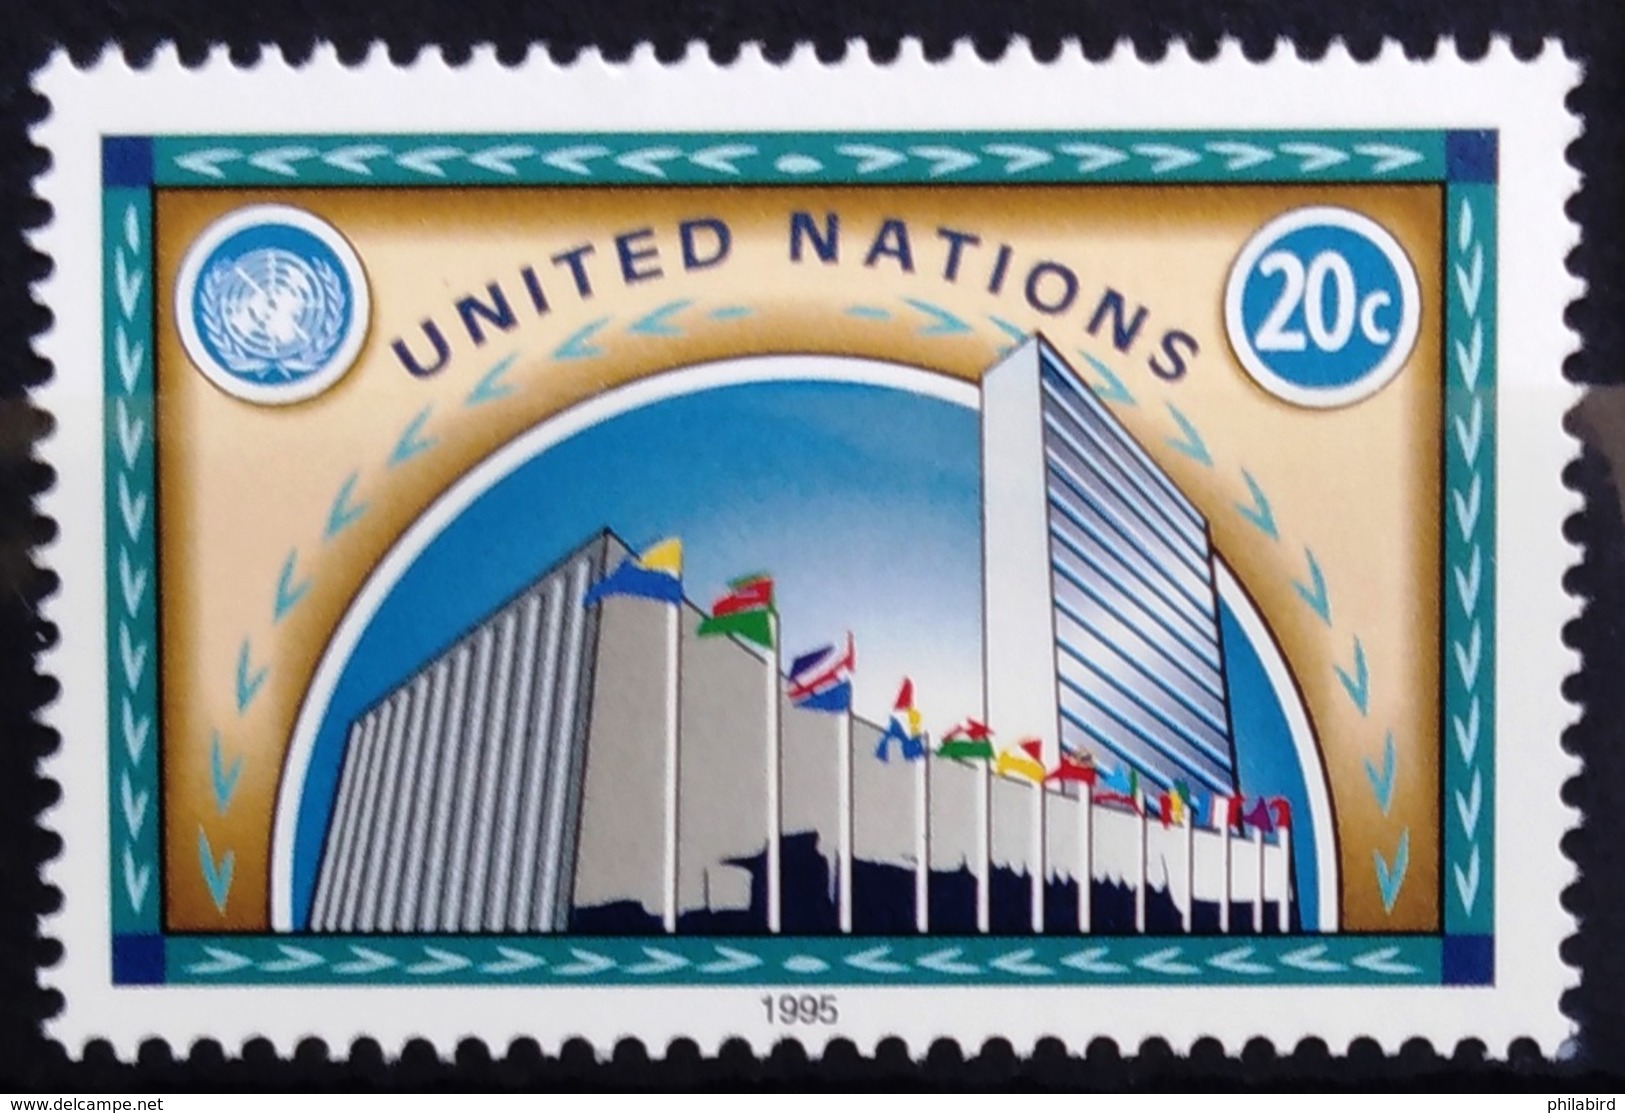 NATIONS-UNIS  NEW YORK                   N° 677                      NEUF** - Nuevos